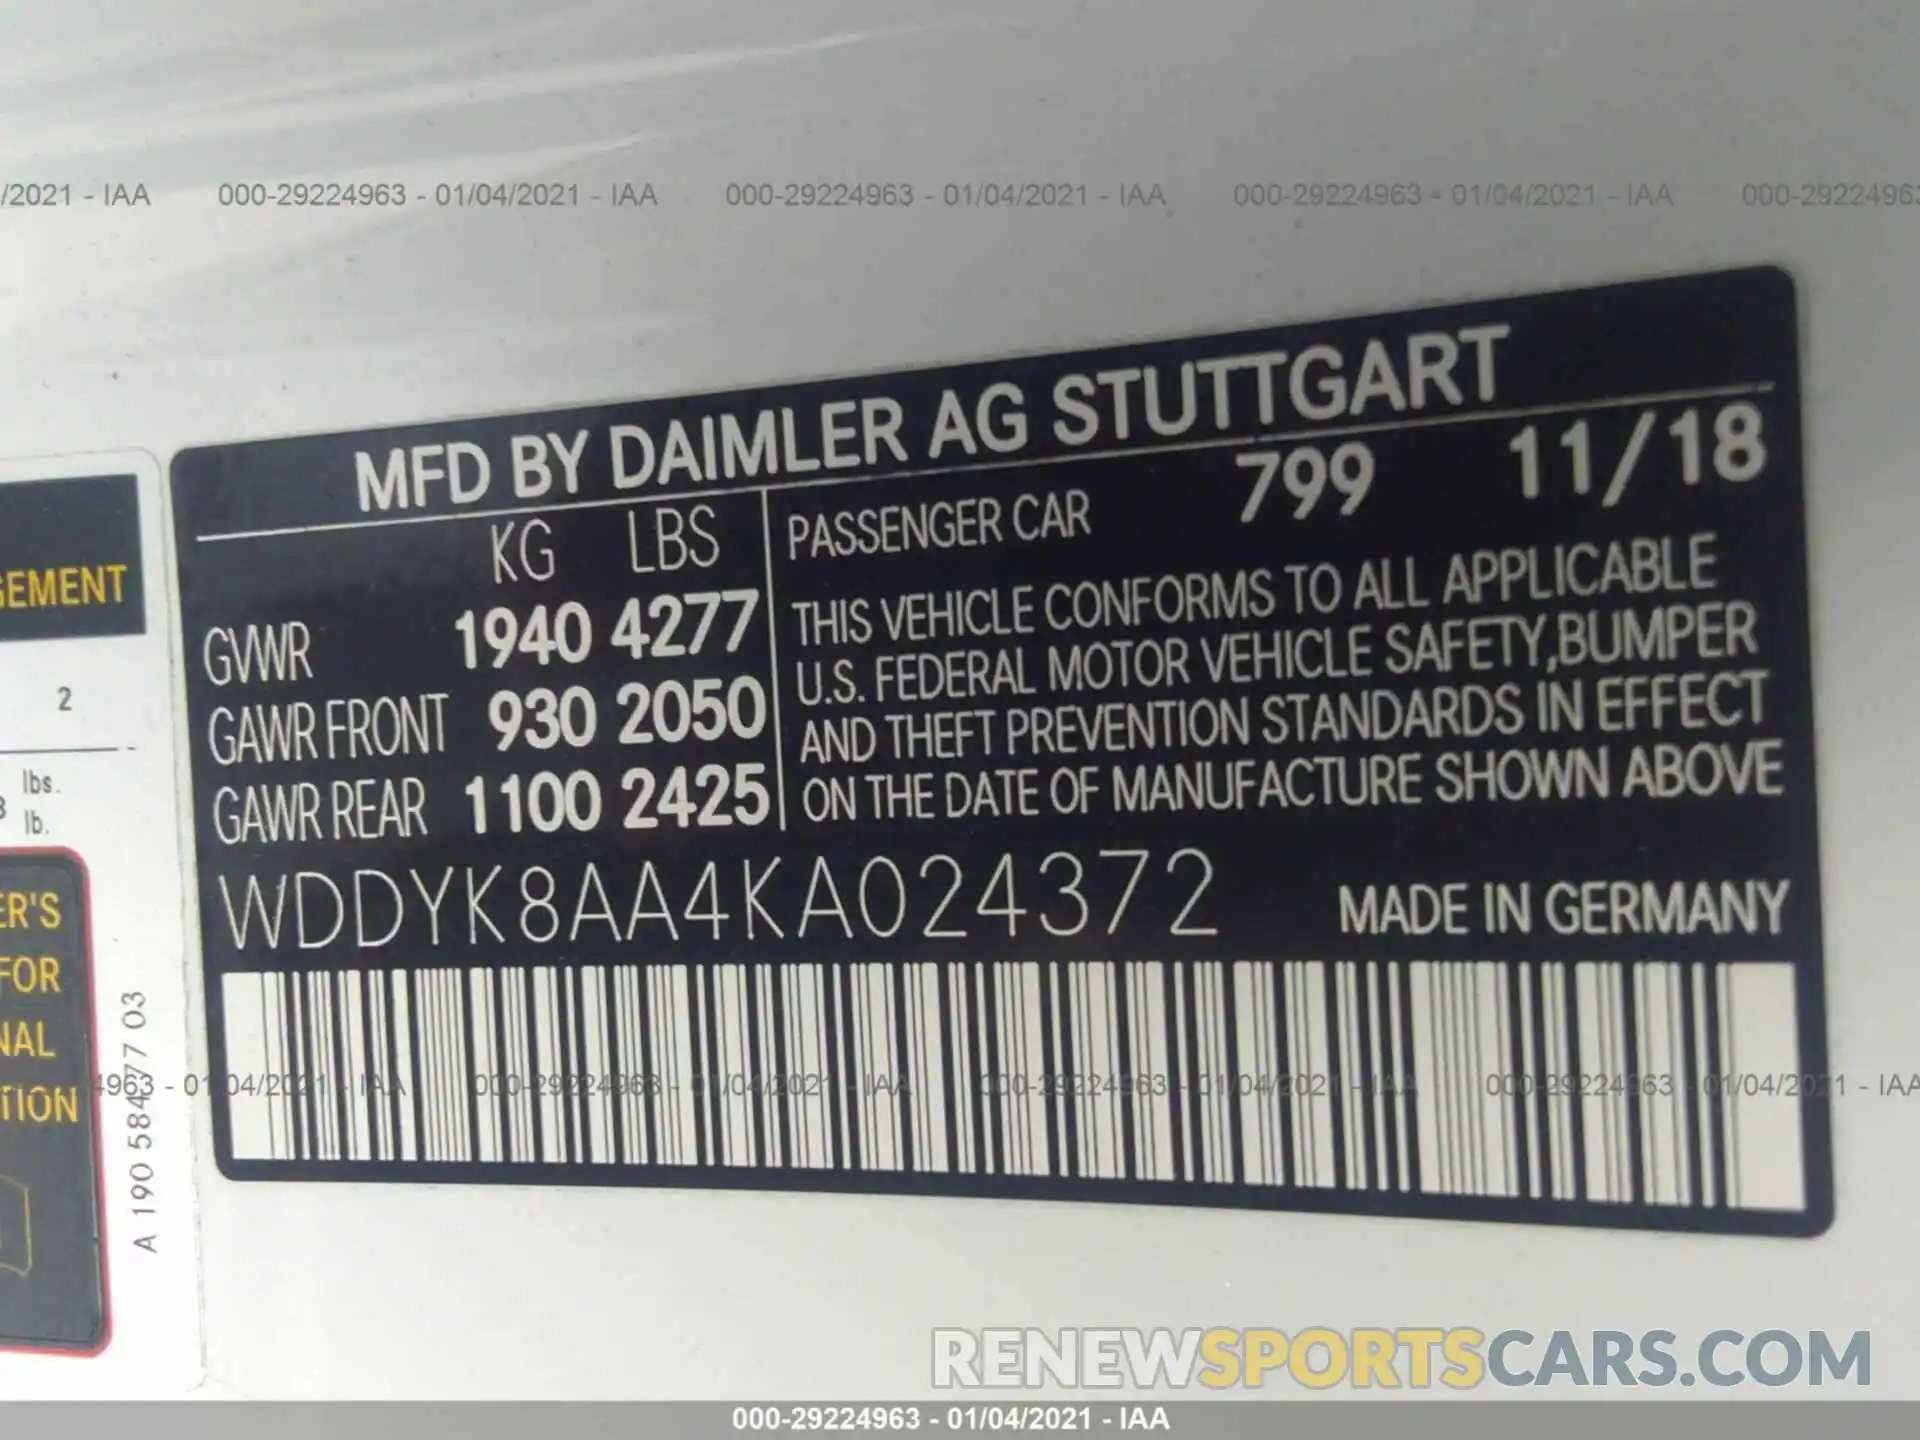 9 Photograph of a damaged car WDDYK8AA4KA024372 MERCEDES-BENZ AMG GT 2019